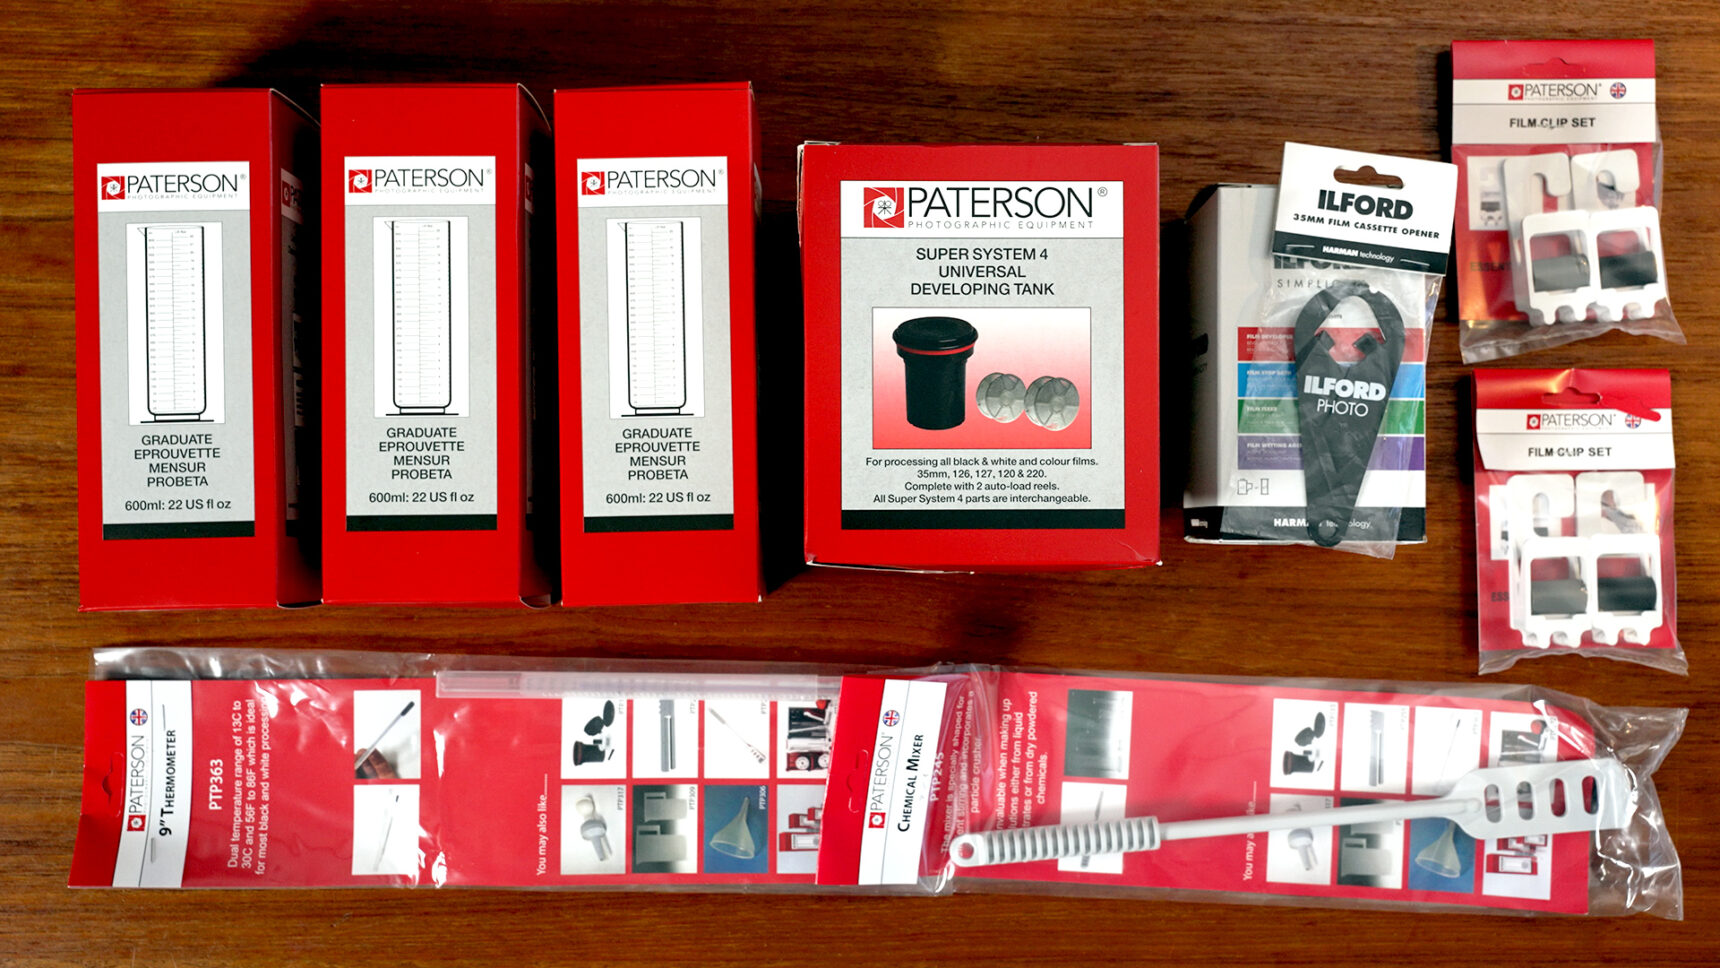 Paterson Film Processing Starter Kit